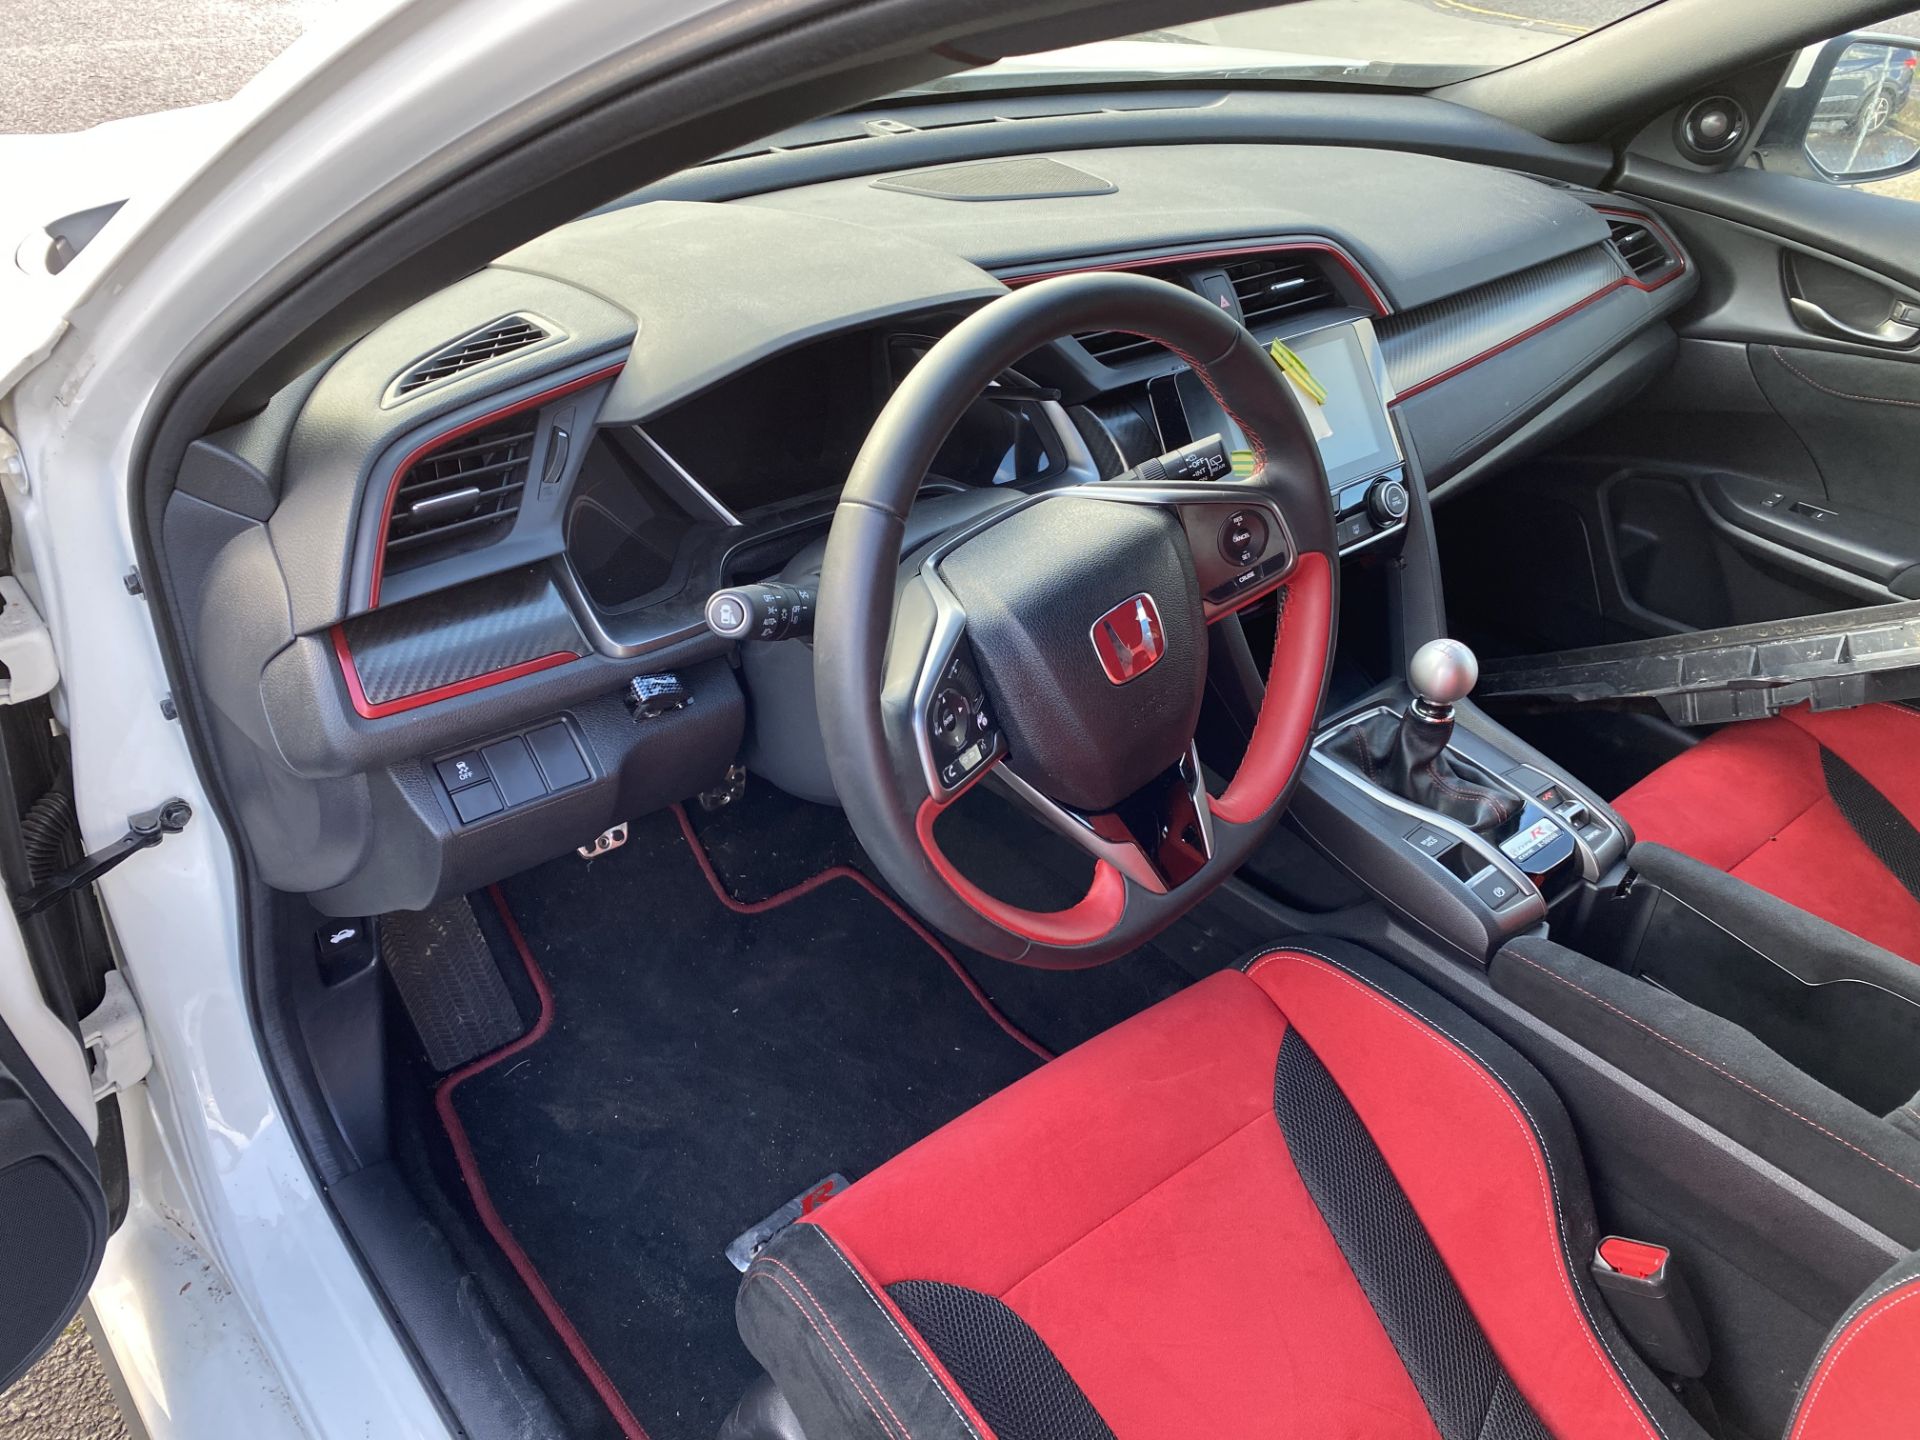 Honda Civic FK8 type R left hand drive race car, White paint finish, 2017 build, standard Type R - Image 8 of 21